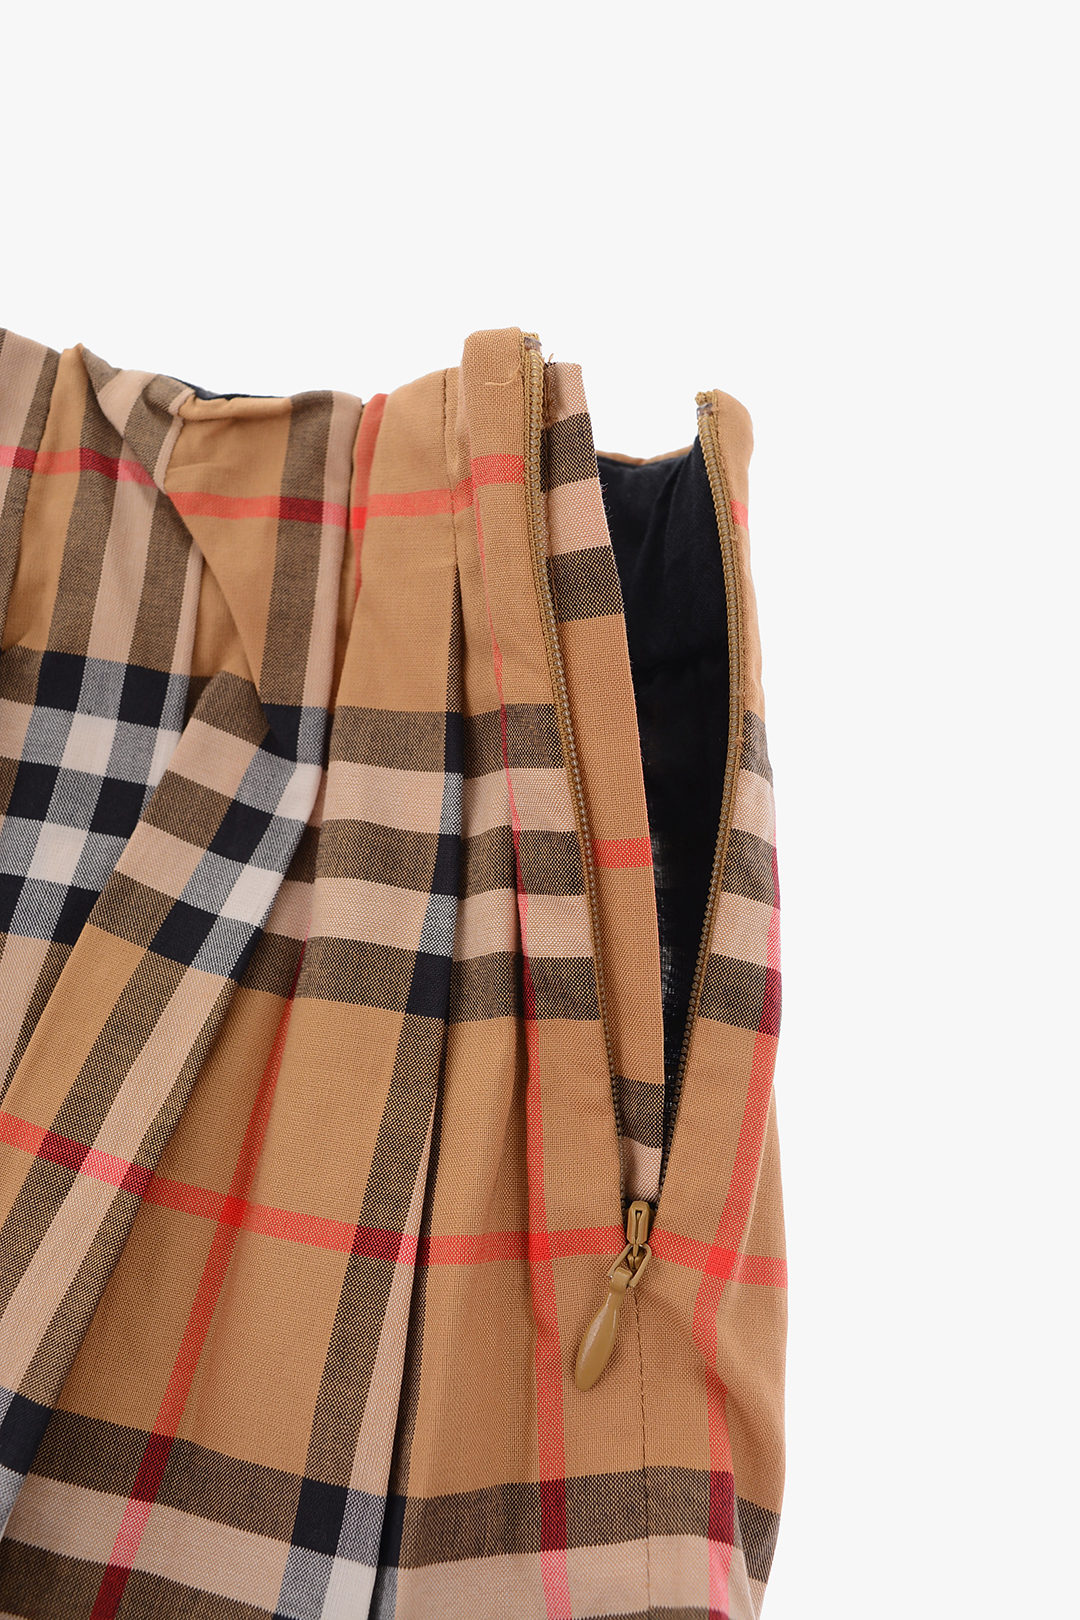 Burberry Girls Plaid Skirt Wool Pleated size 5 Italy Nova Check NEW | eBay